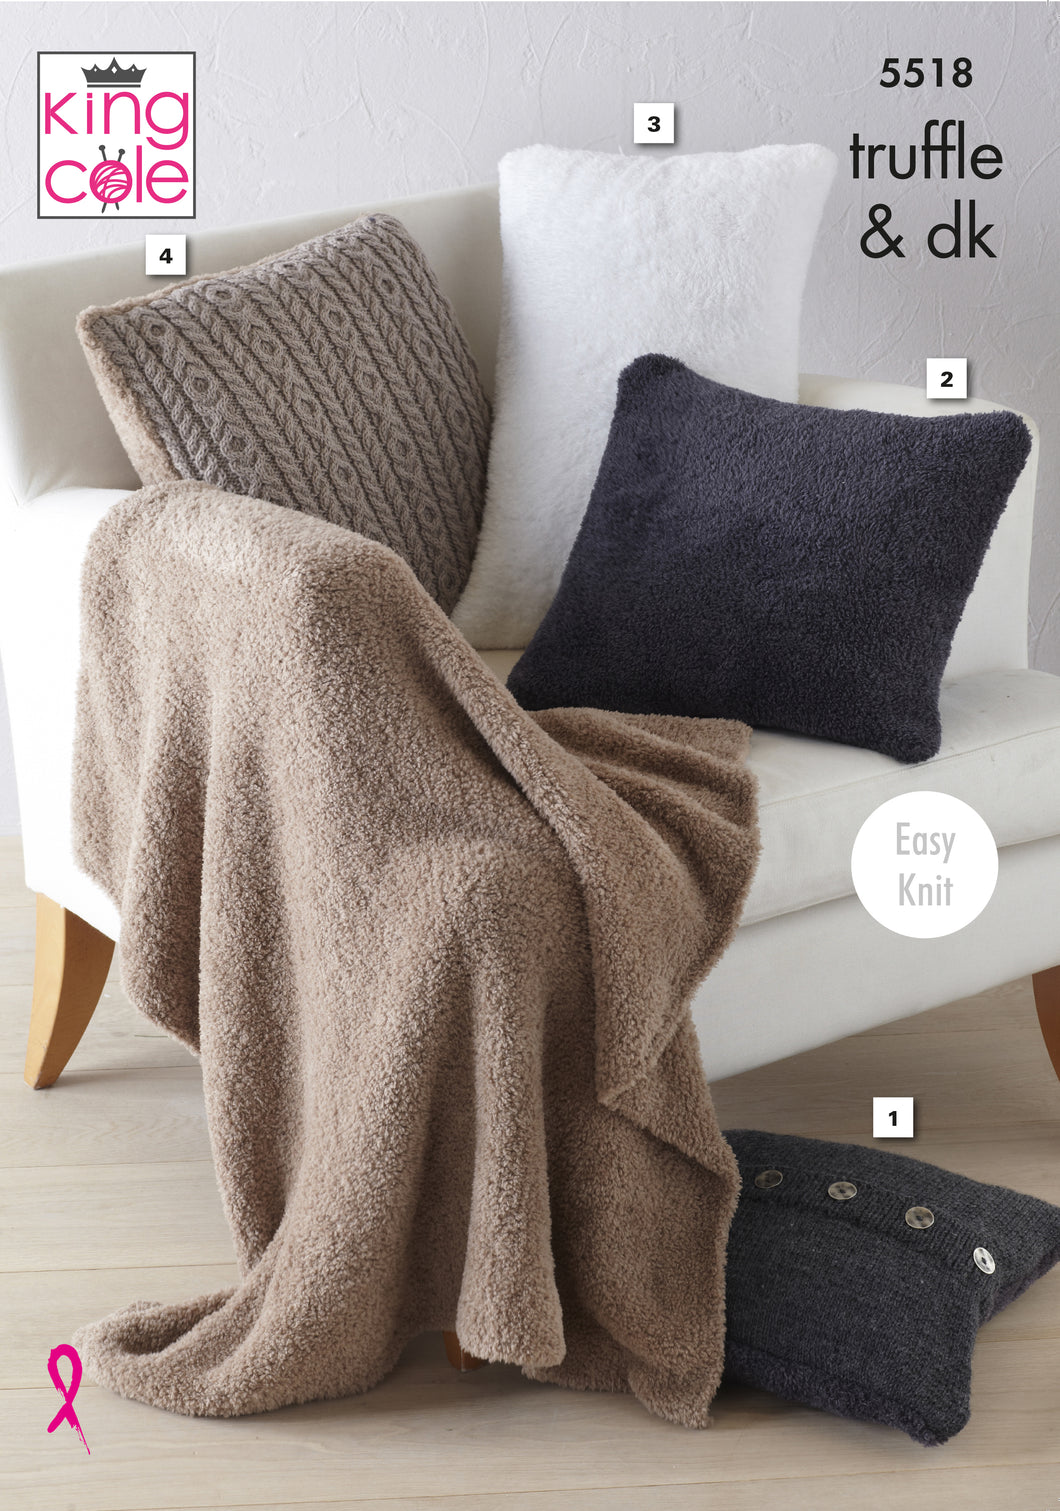 Cushions & Lap Blanket Knitted in Truffle & Merino Blend DK 5518